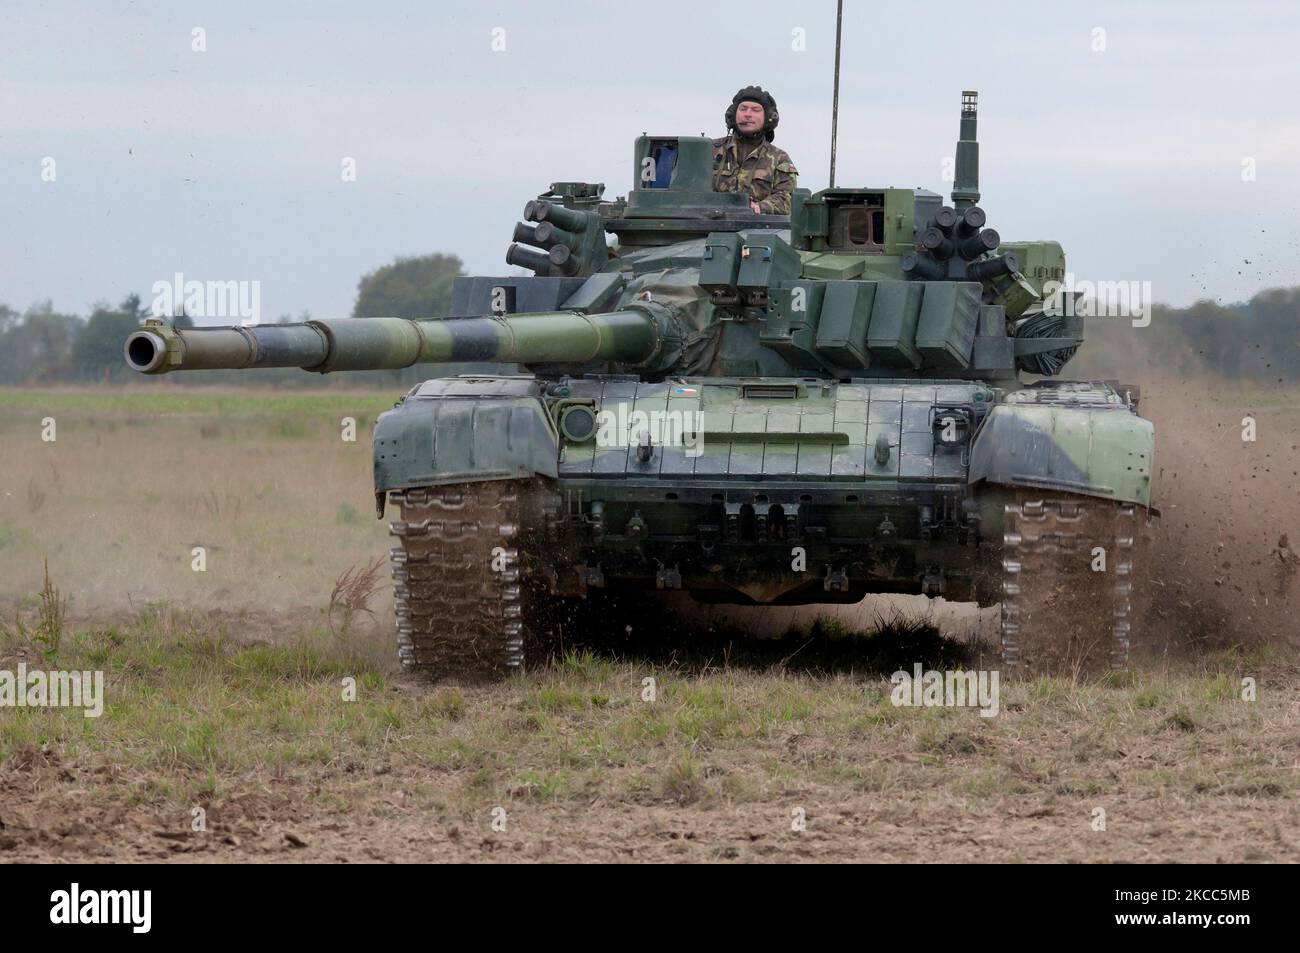 Czech Army T-72M4 Main Battle Tank. Stock Photo